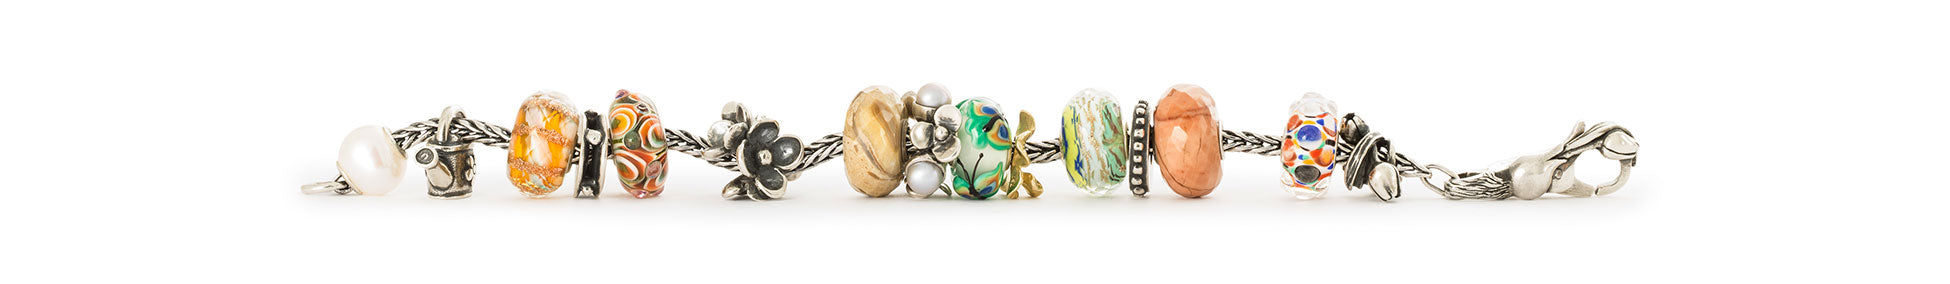 Trollbeads Fuchsschwanz-Armband mit Beads der Blühende Verbindungen Frühlingskollektion